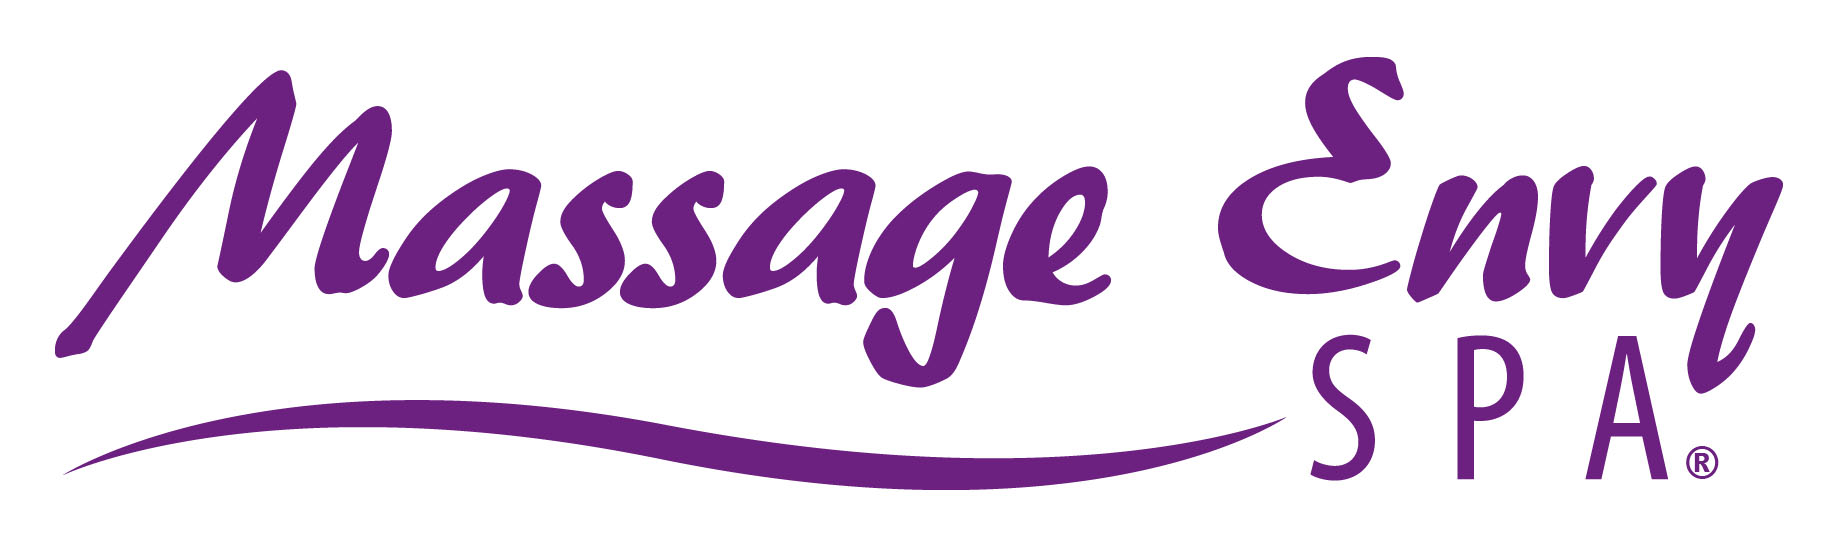 Massage Envy Spa Reaches New Franchise Agreement Milestone, MASSAGE Magazine